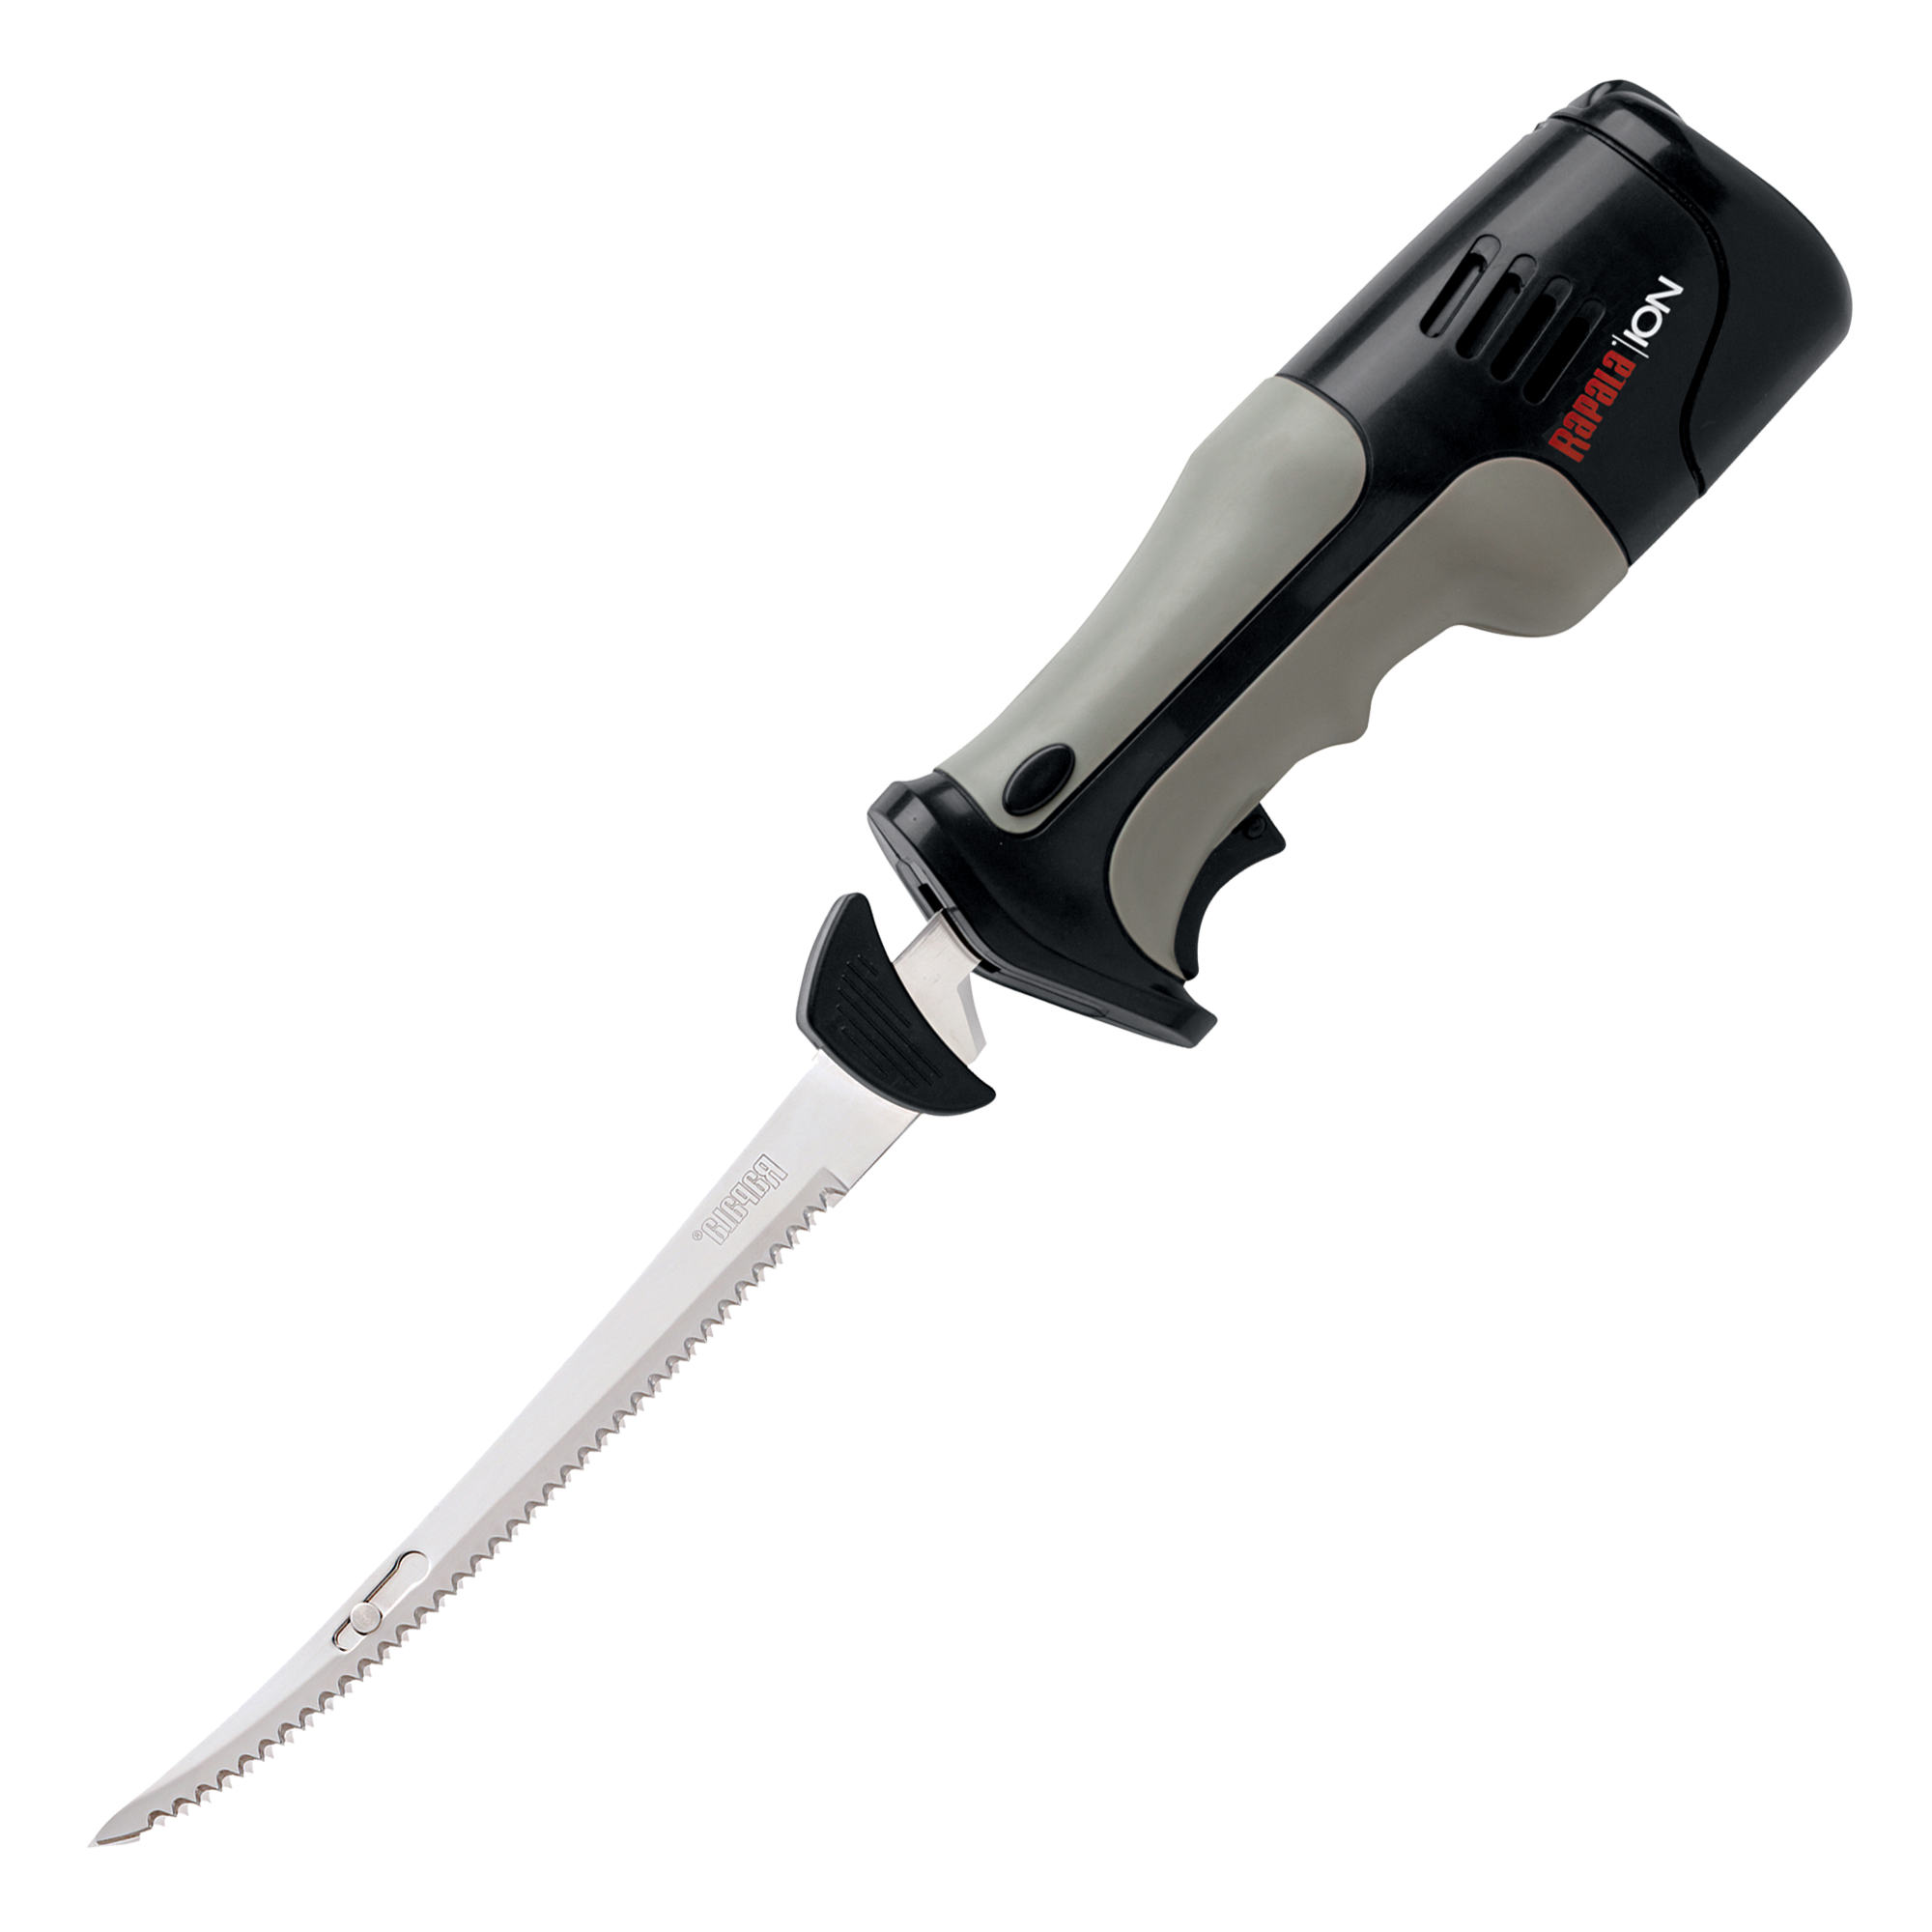 Bubba Lithium Ion Cordless Fillet Knife Set, 4 Blade